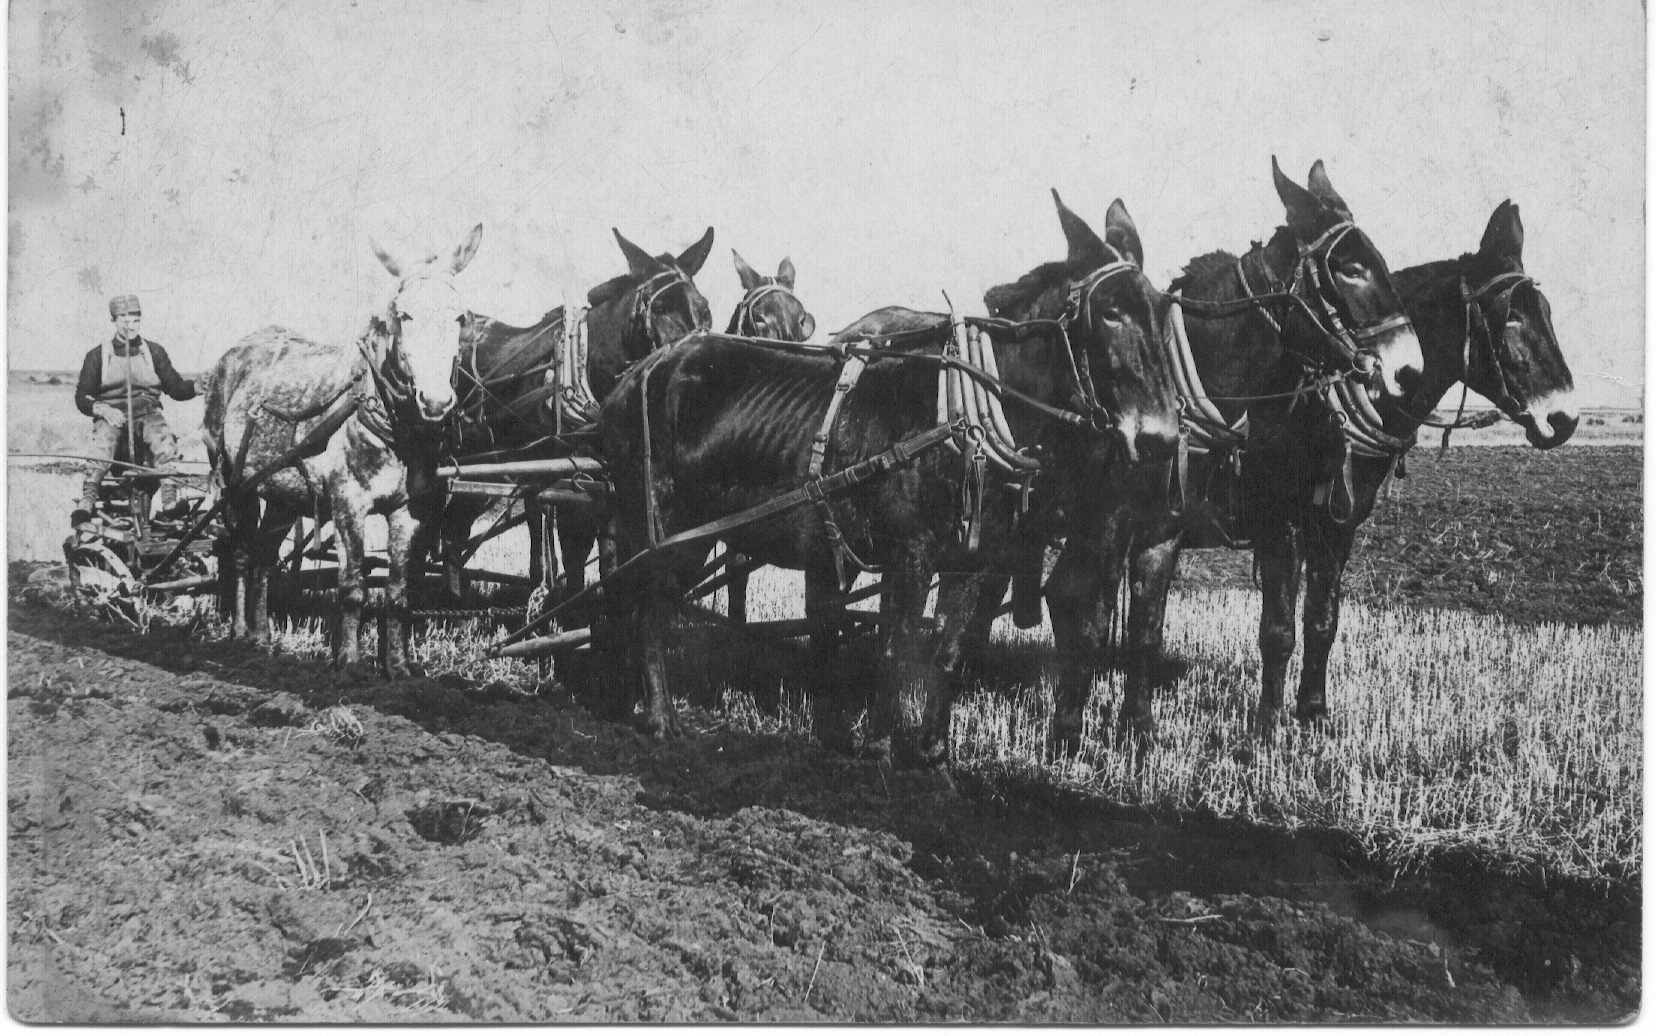 It took a lot of mule power to break that sod in North Dakota back in the 1890s.